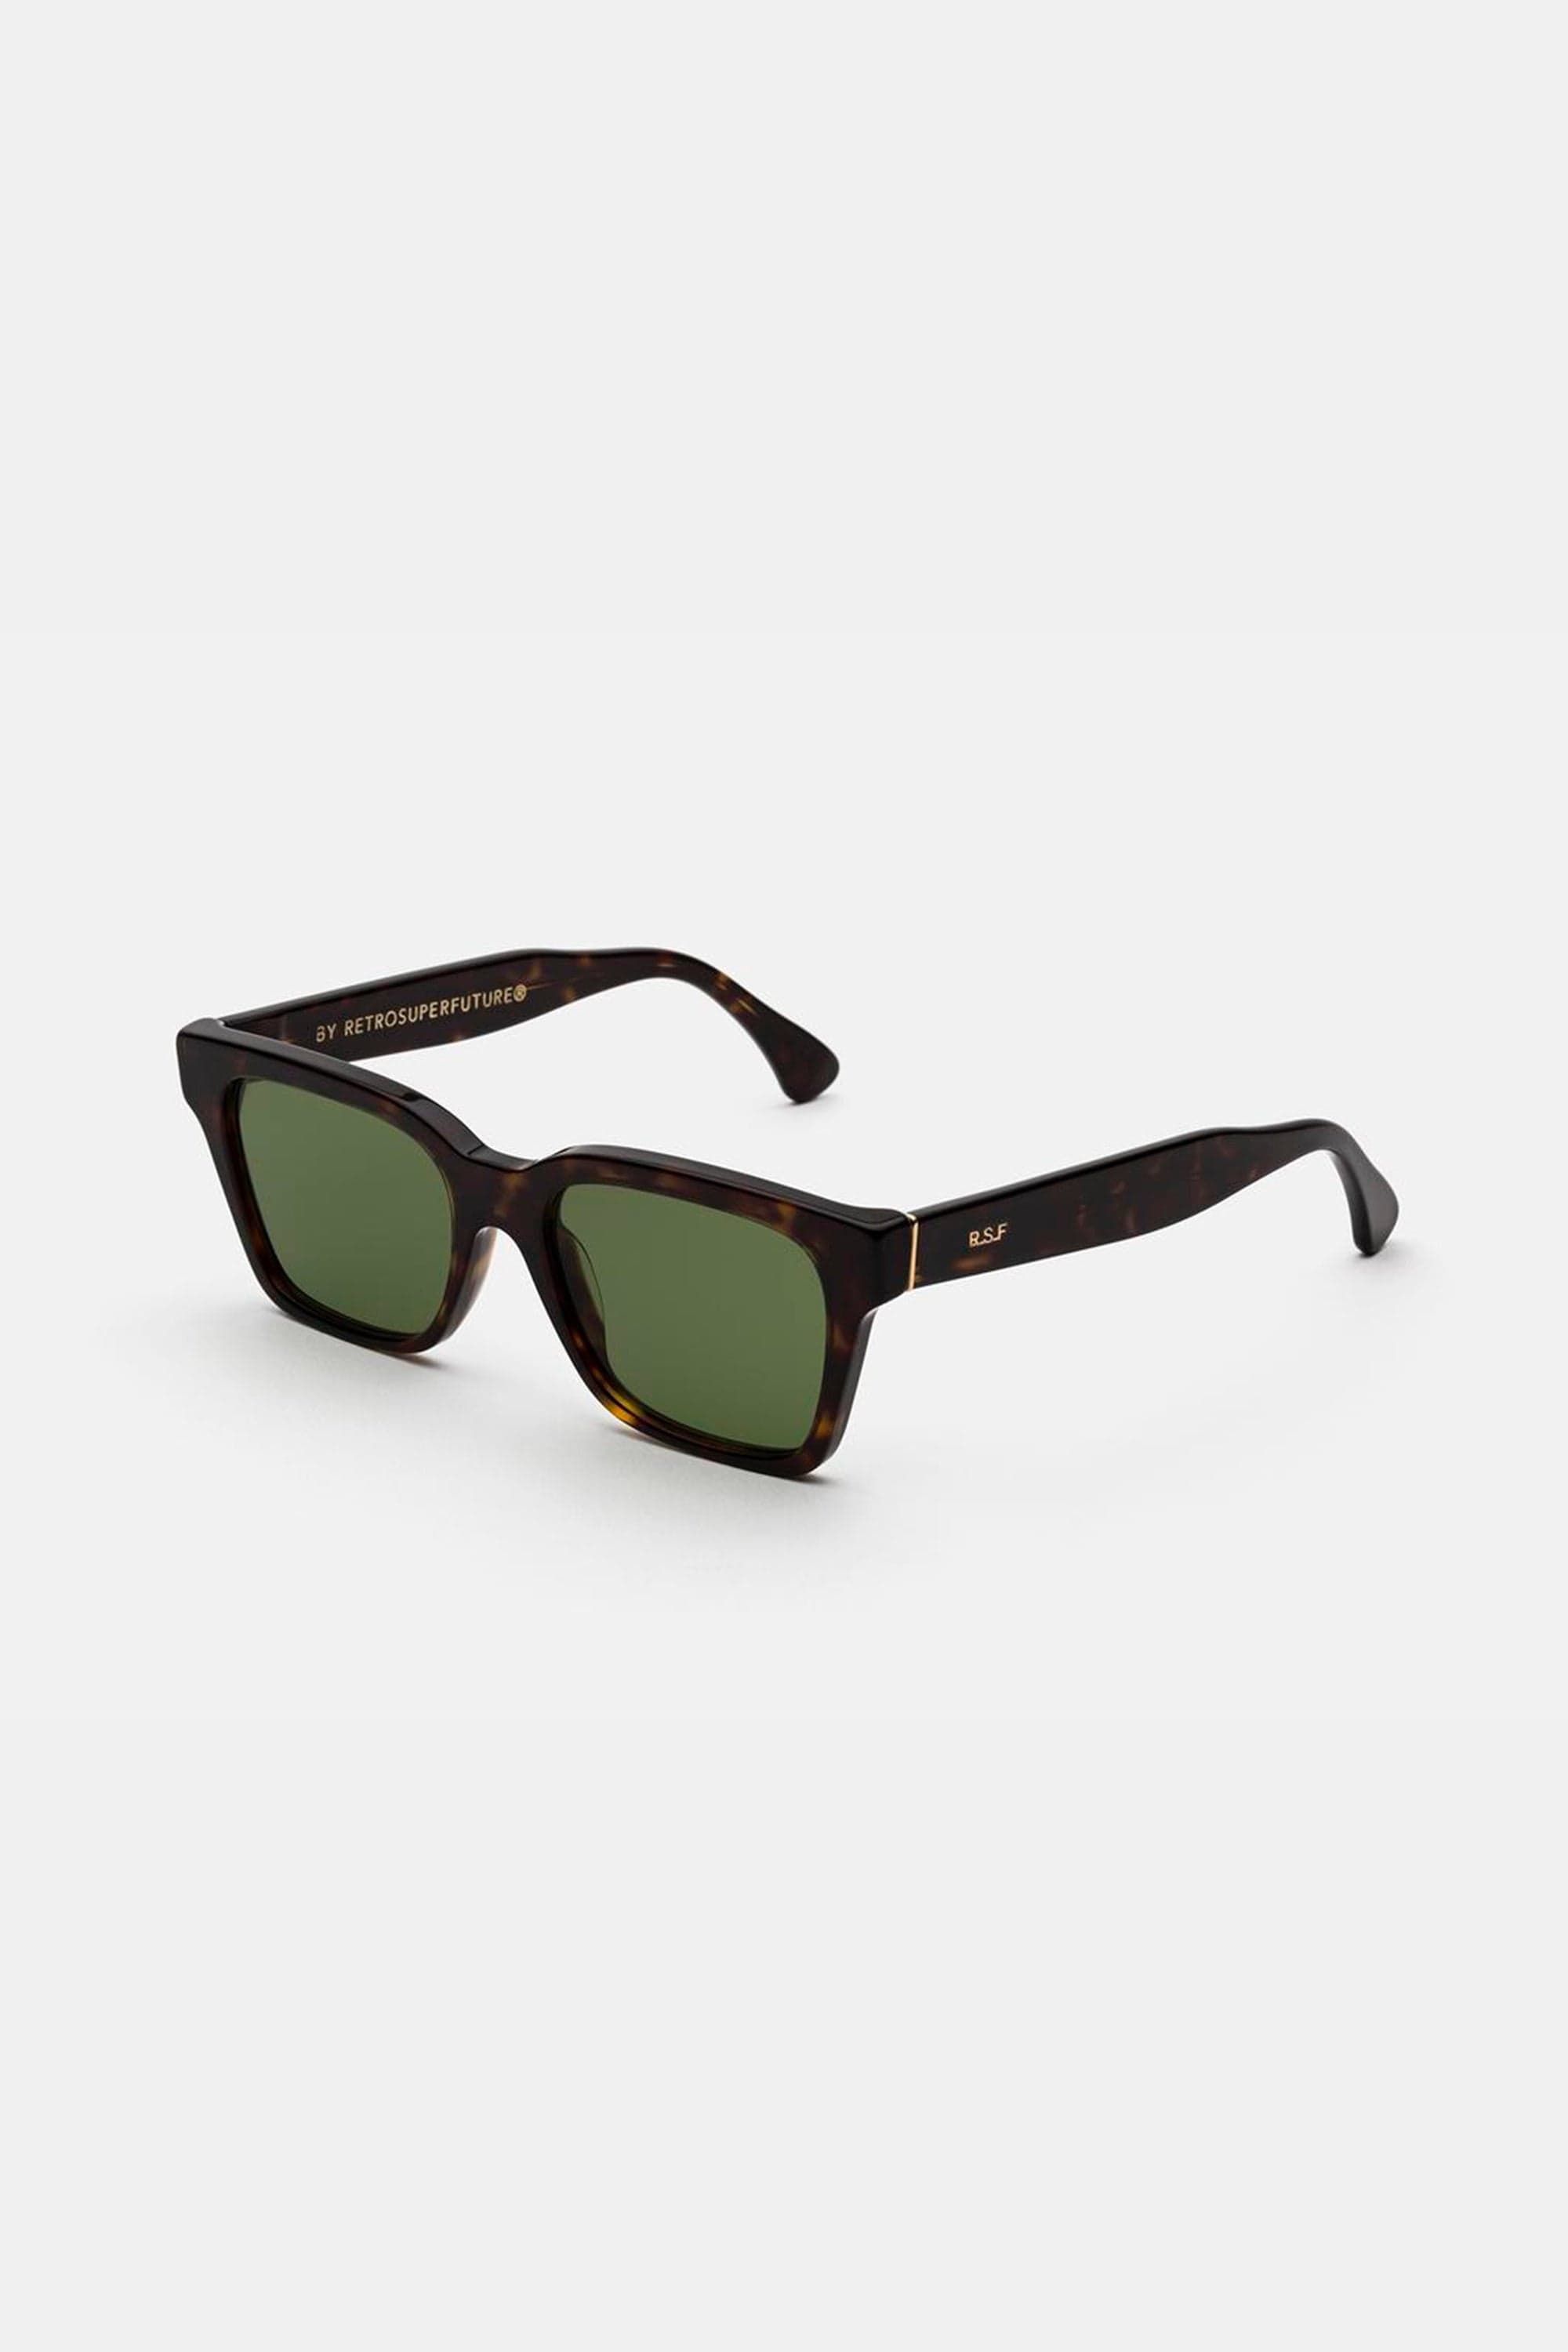 Retrosuperfuture UNICO 3627 – Eyewear sunglasses Club green